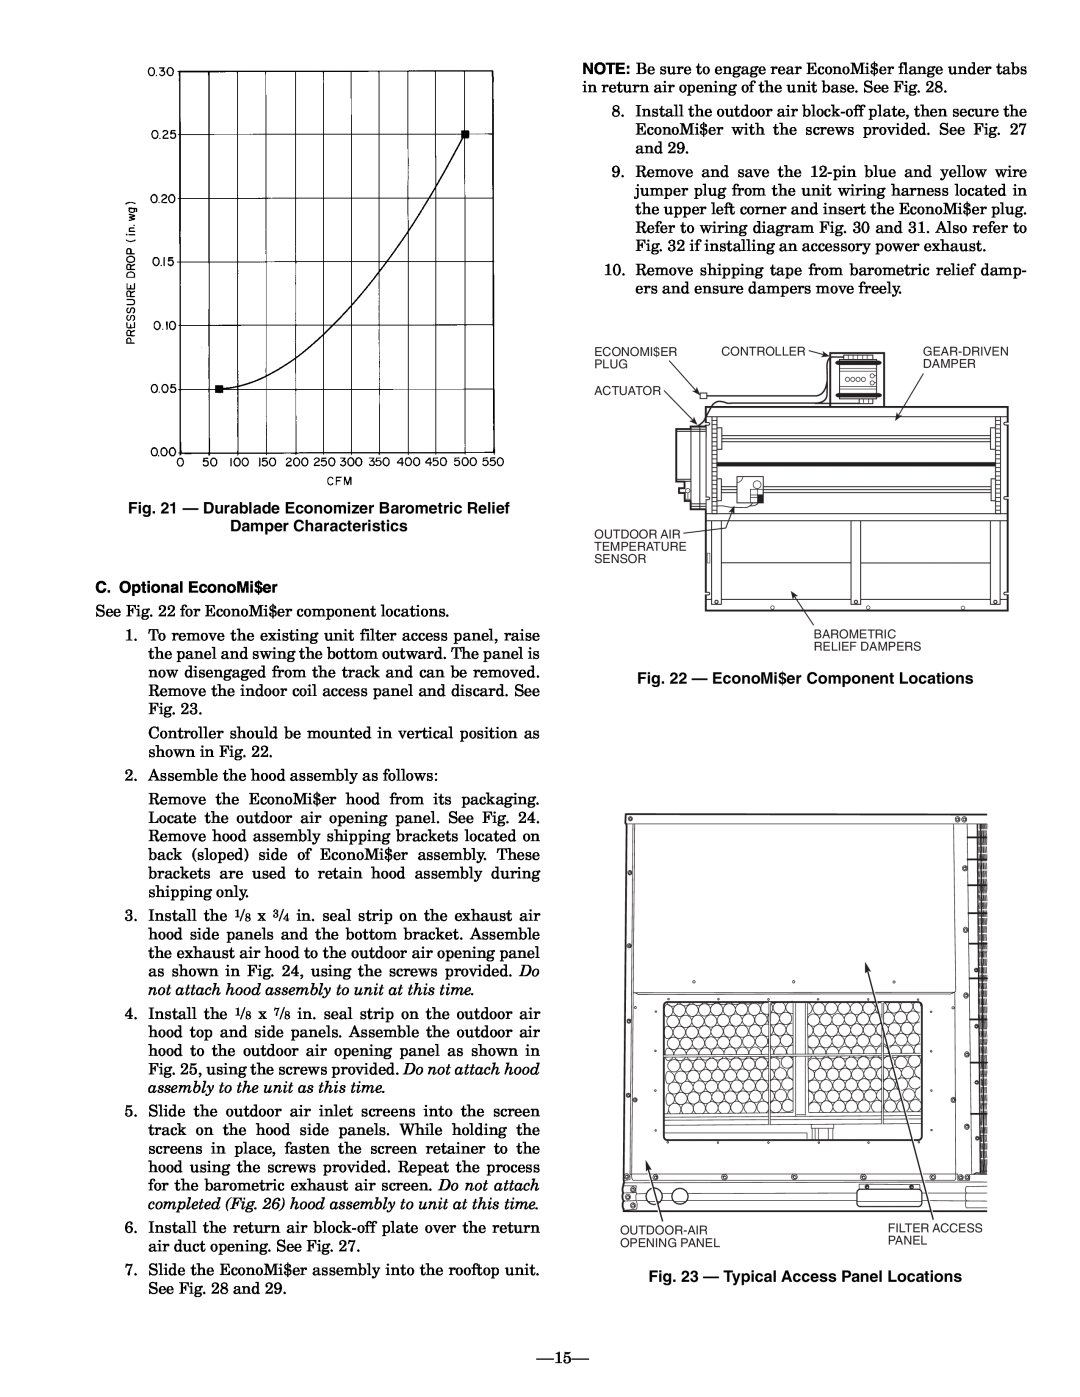 Bryant 548D installation instructions Durablade Economizer Barometric Relief, Damper Characteristics C. Optional EconoMi$er 